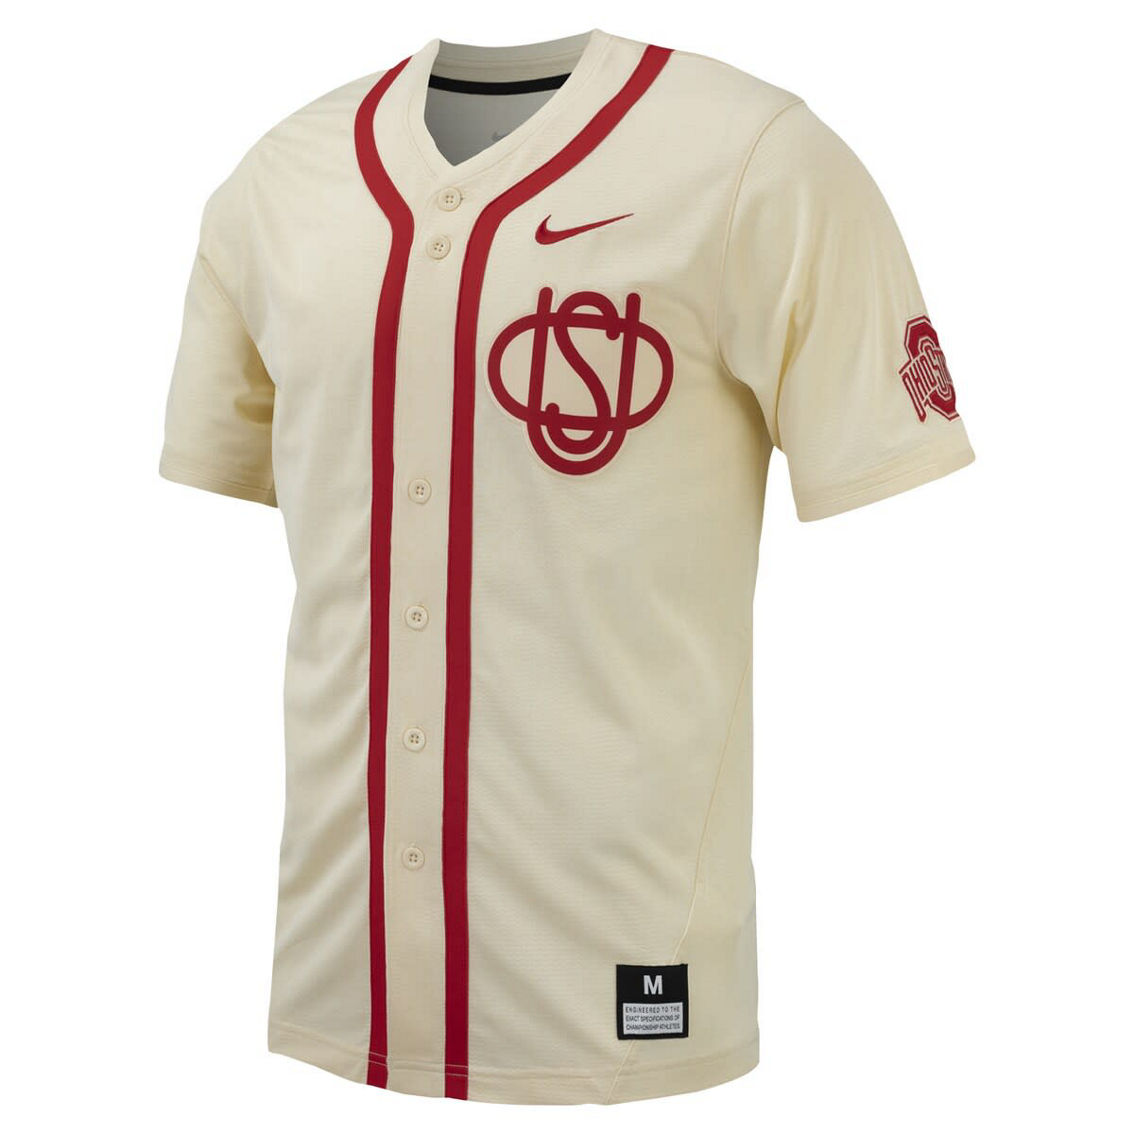 Nike Men's Cream Ohio State Buckeyes Replica Full-Button Baseball Jersey - Image 3 of 4